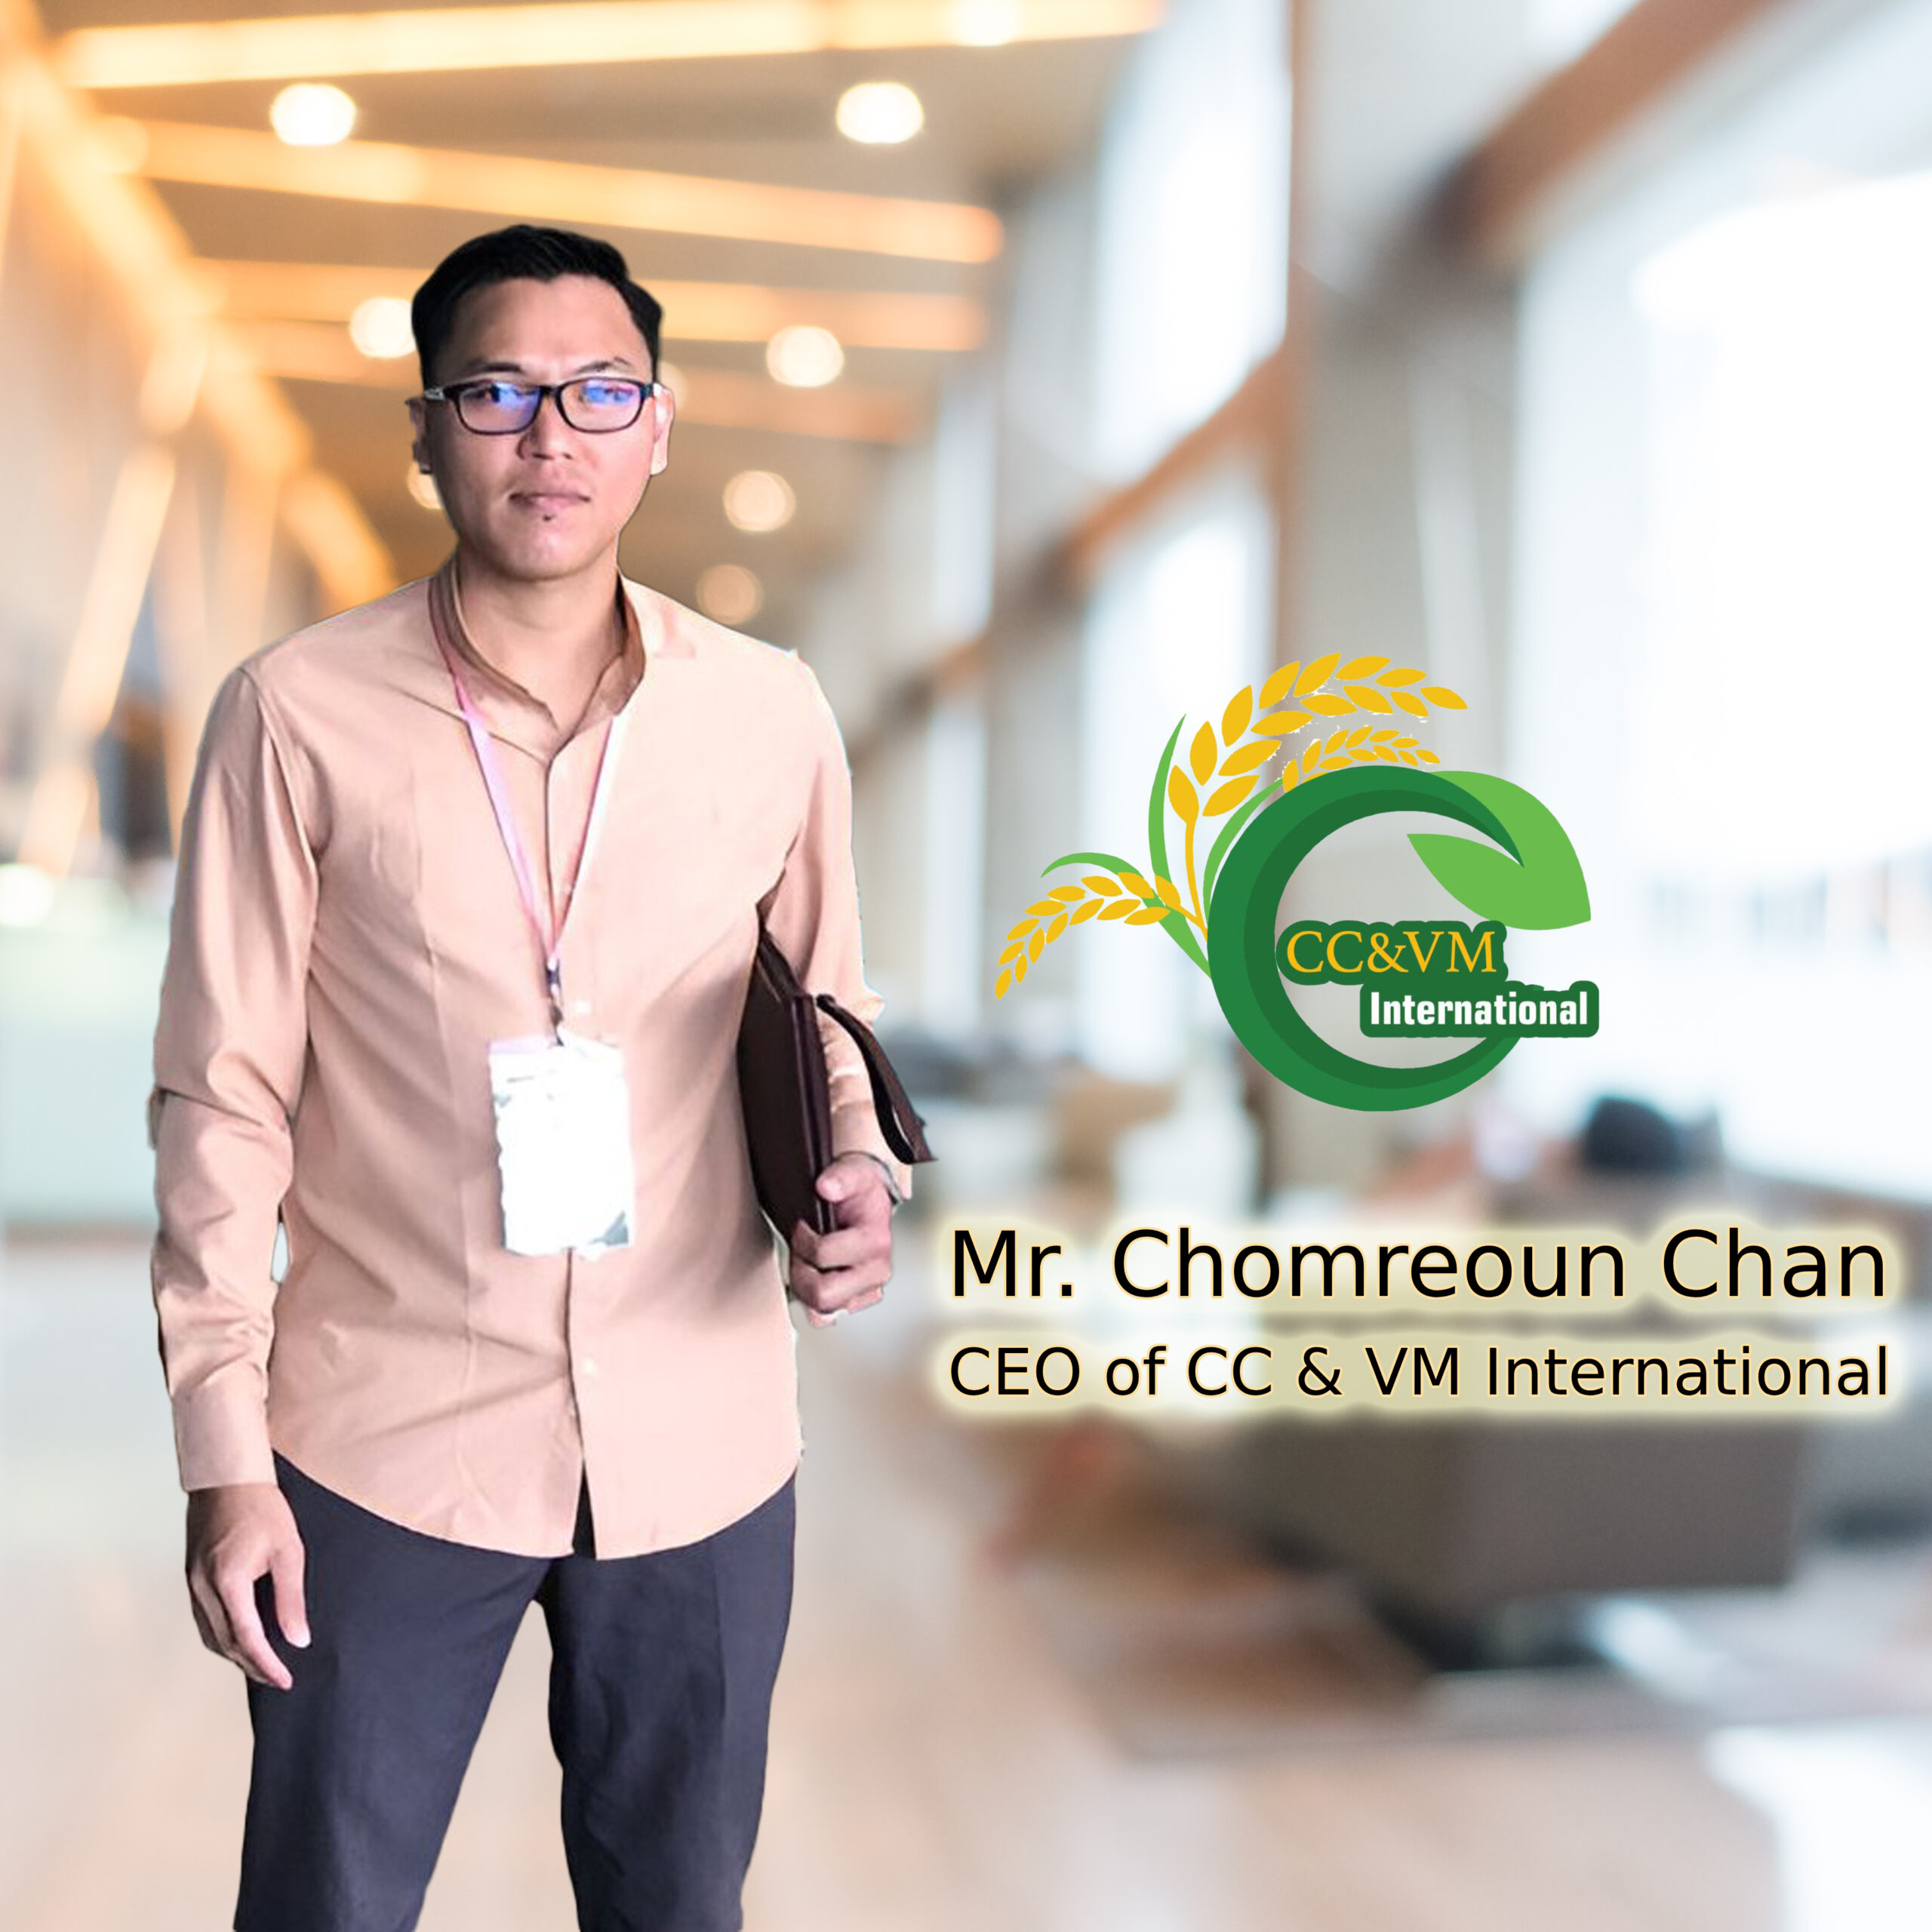 Chan Chomreoun 先生, CC& VM international 的 CEO